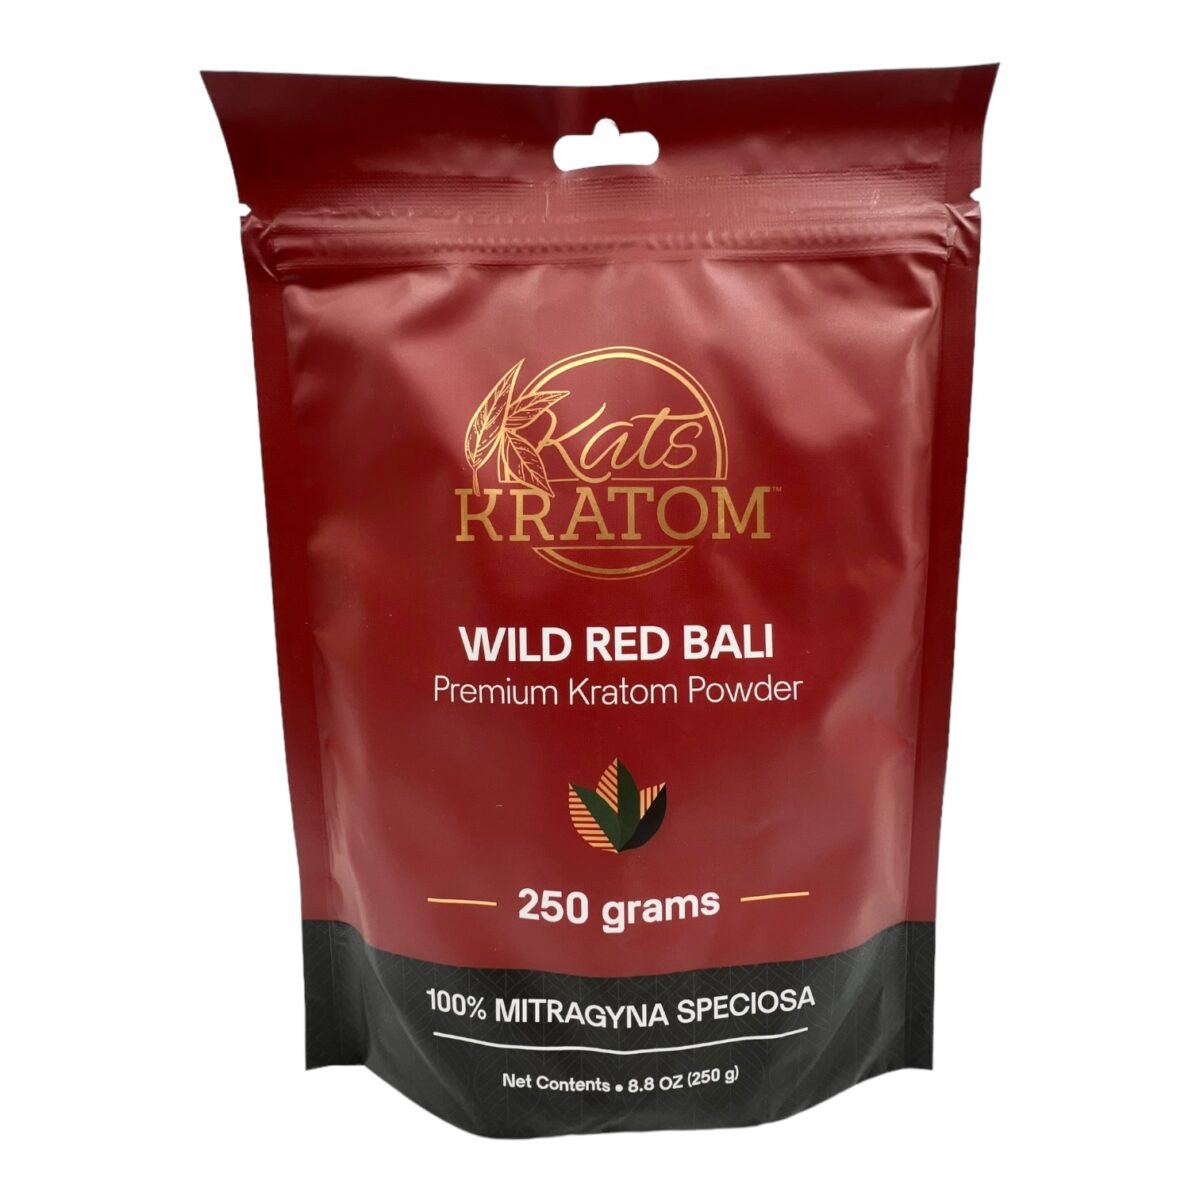 Kats Kratom Wild Red Bali Powder